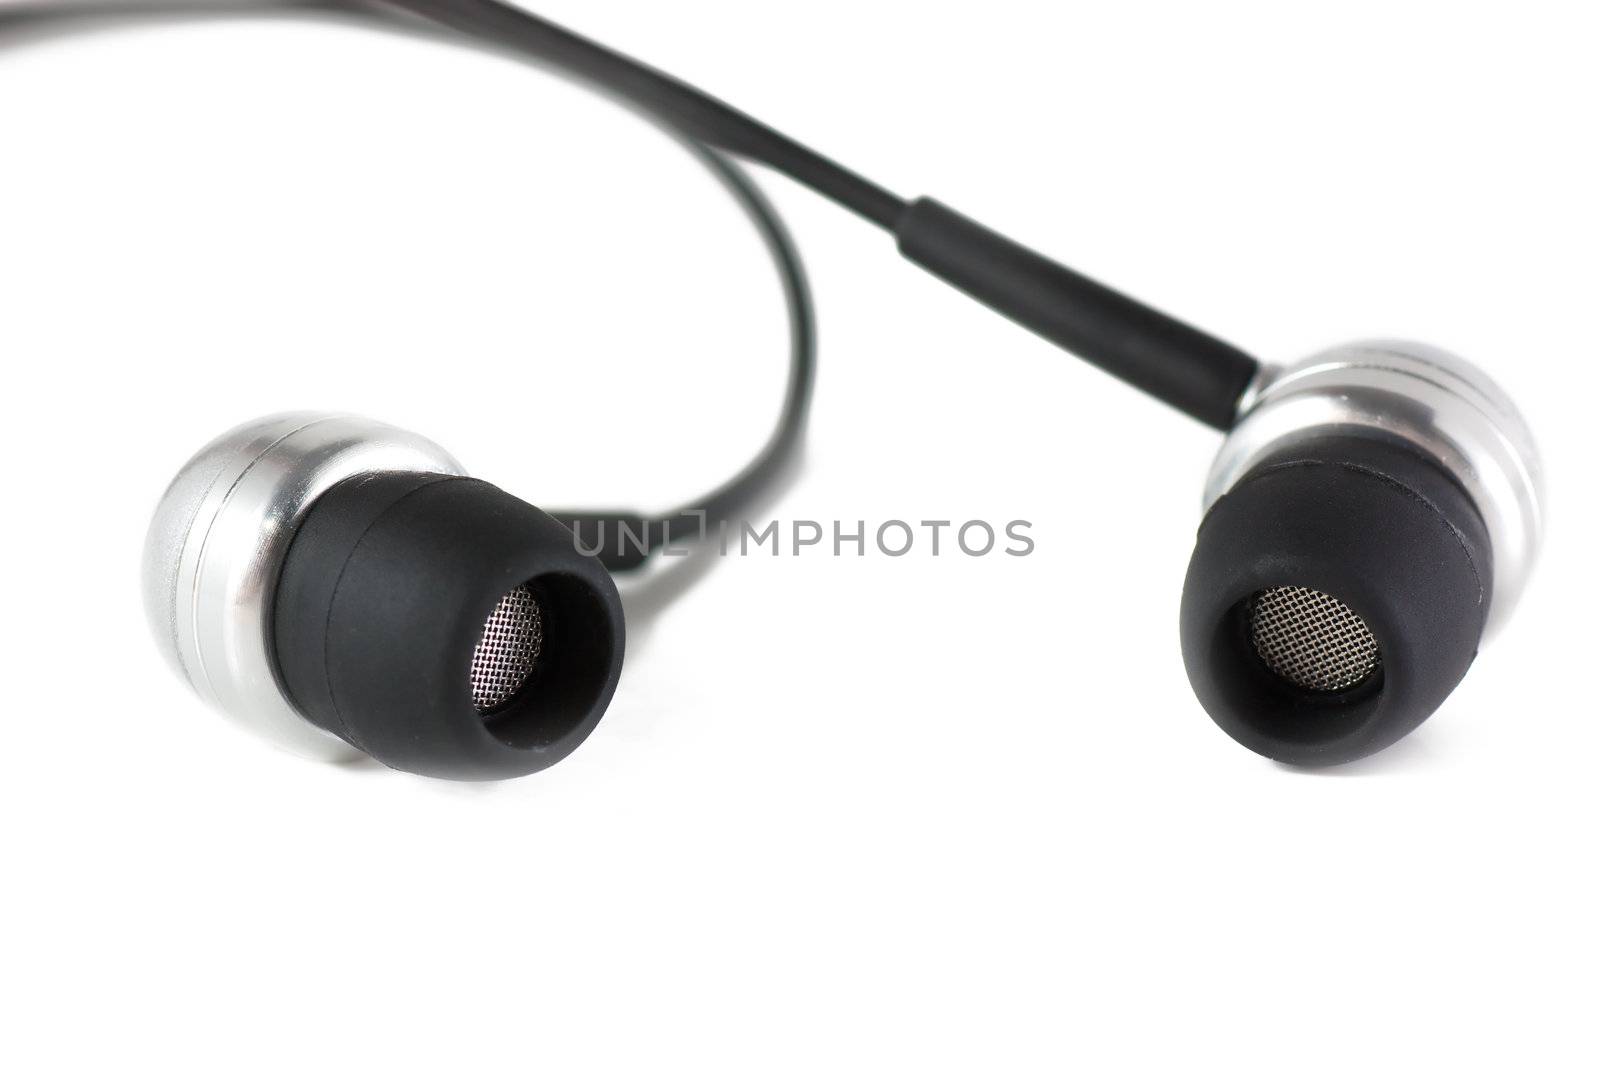 Macro view of a pair of stereo headphones